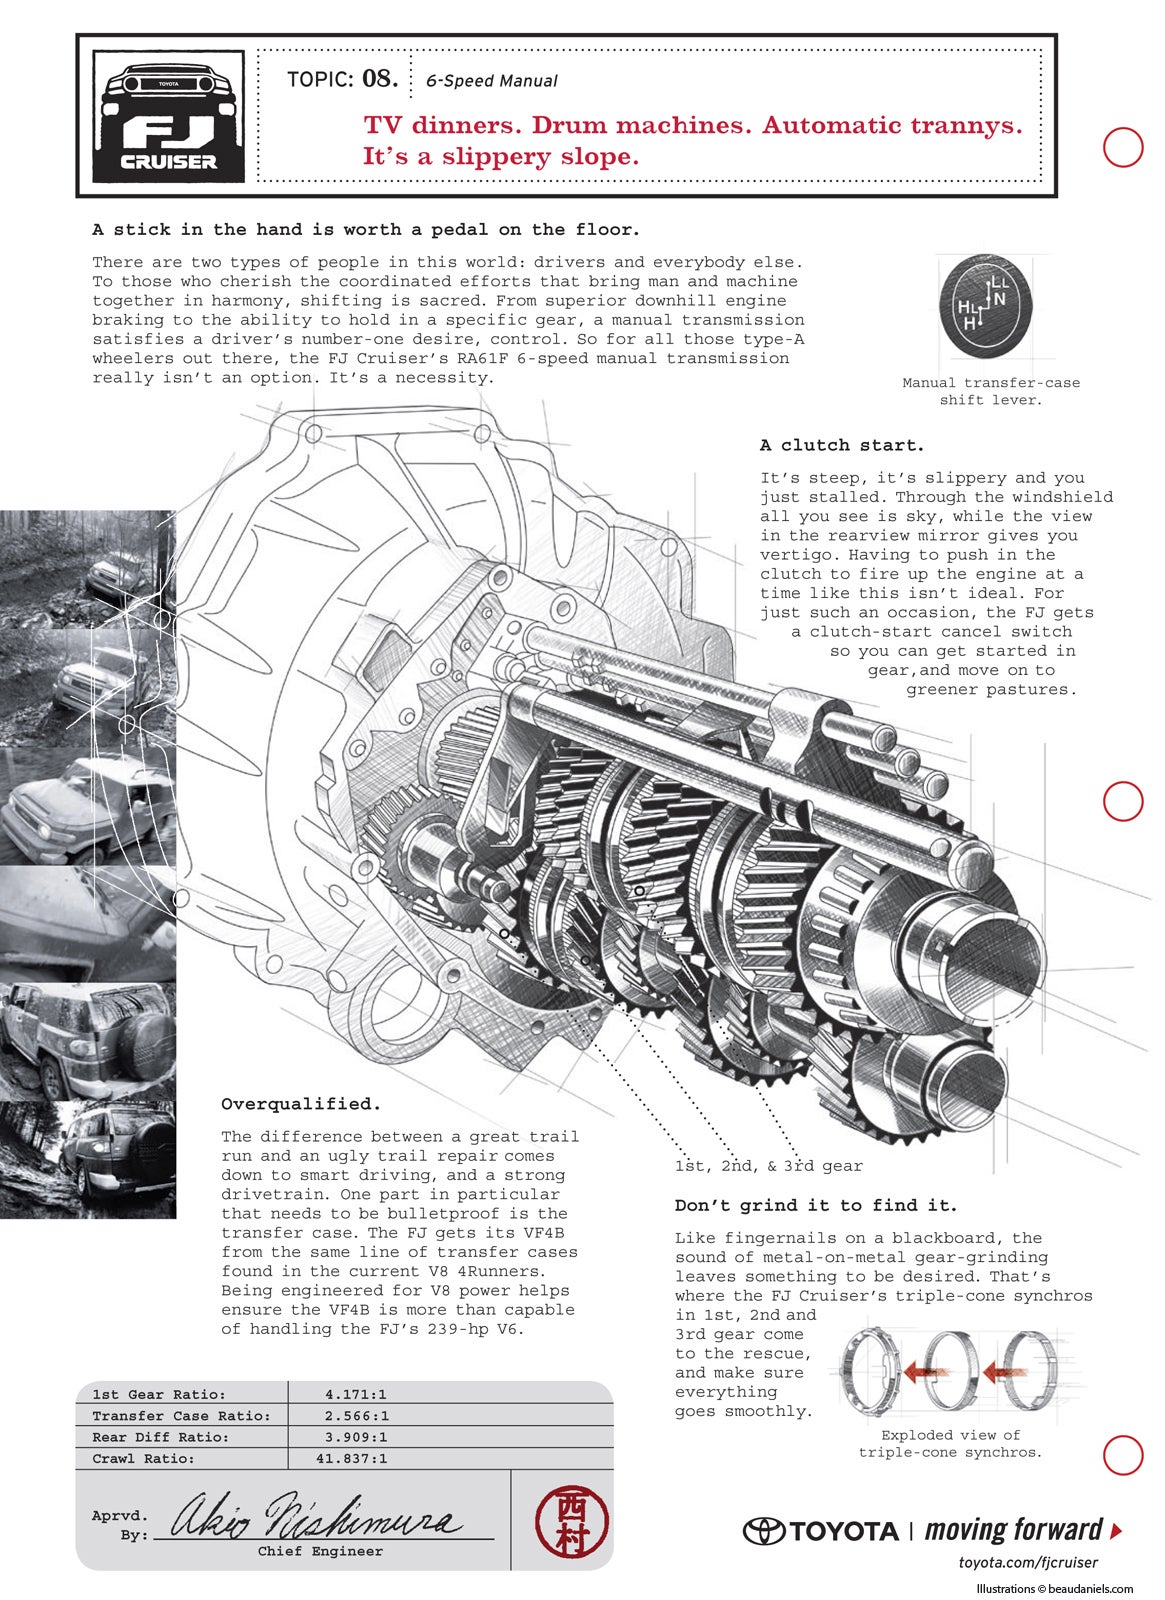 fj cruiser manual transmission autotrader